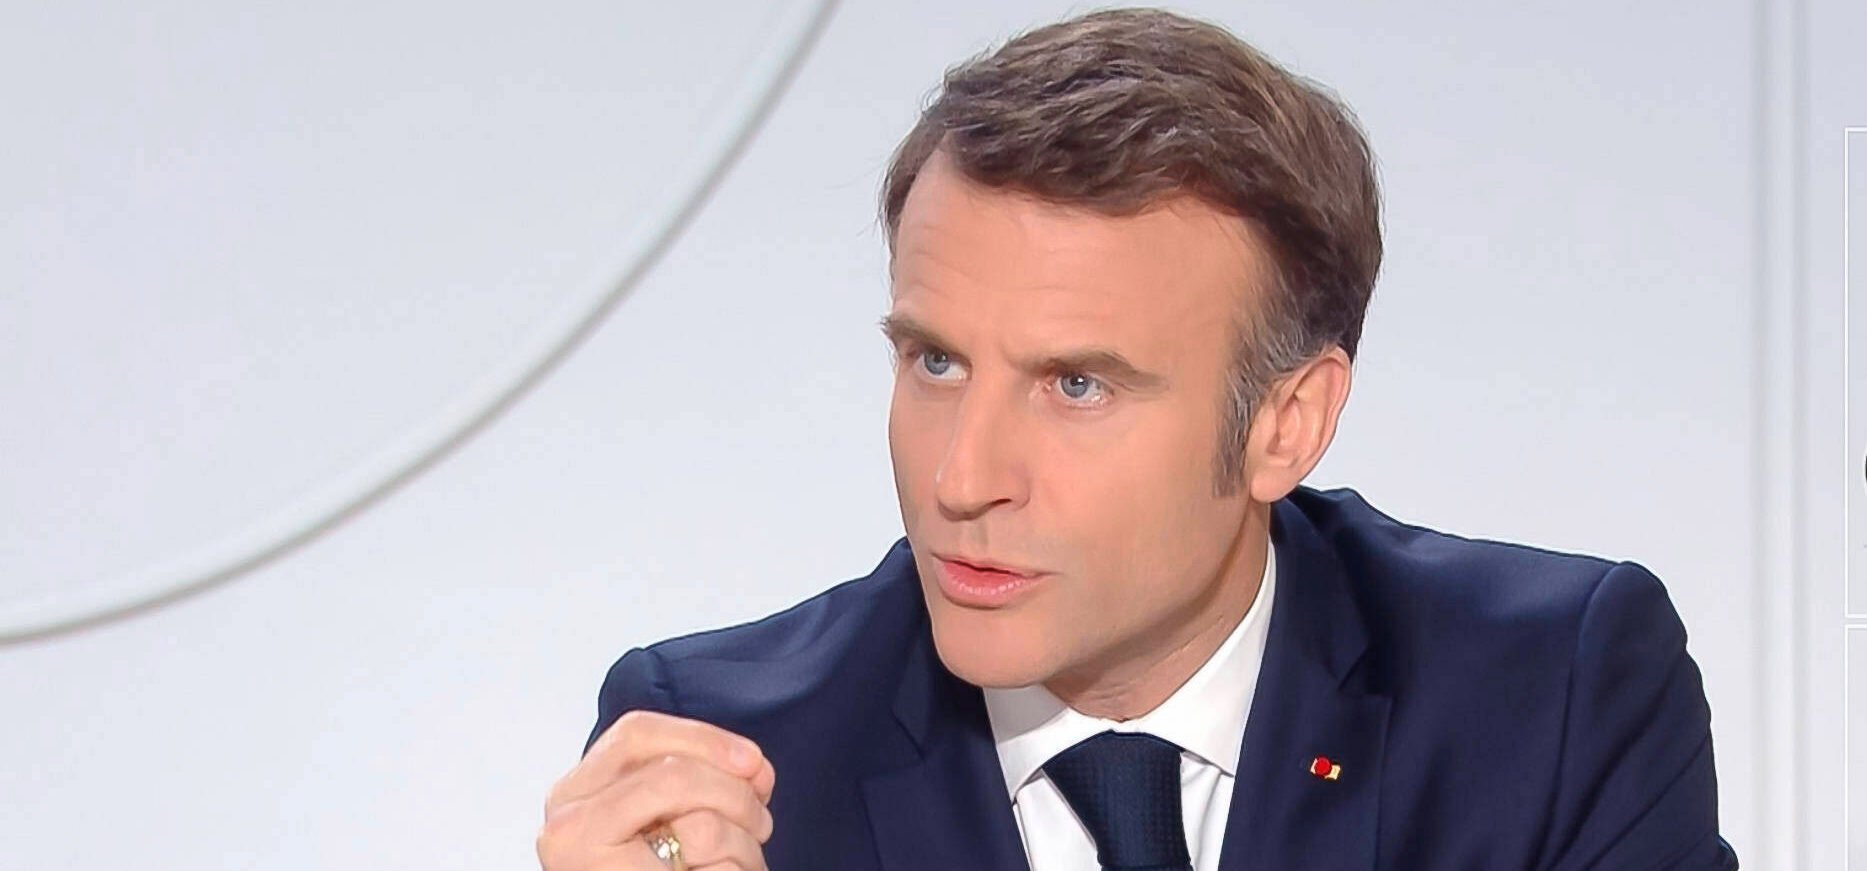 Macron changes rhetoric about war, gives paradigm-shifting speech